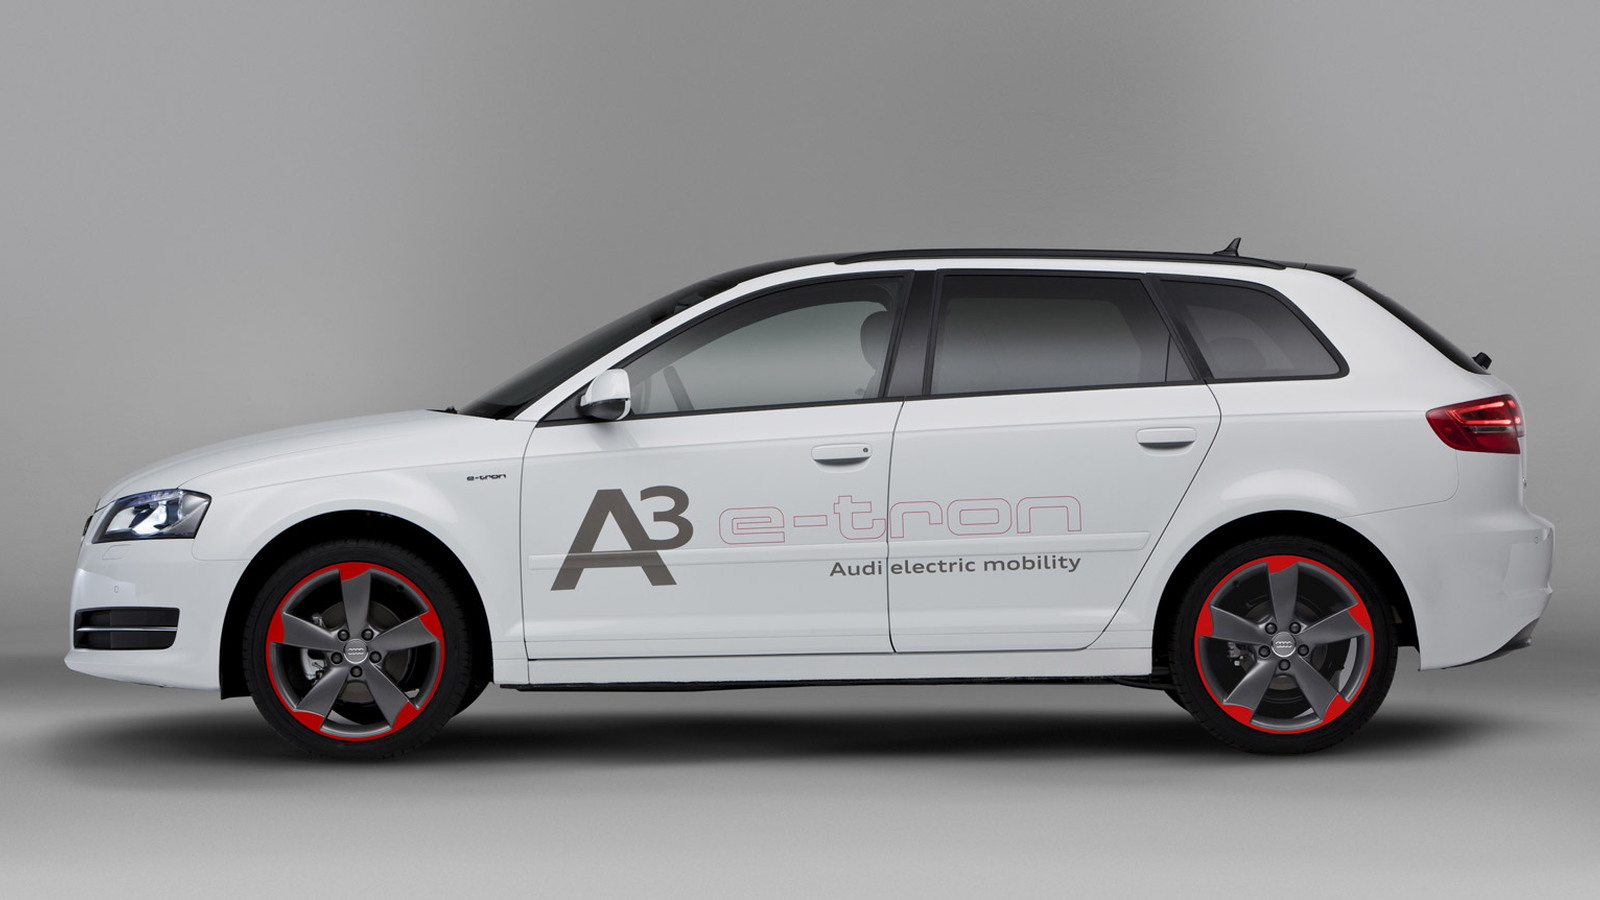 2012 Audi A3 e-tron prototype